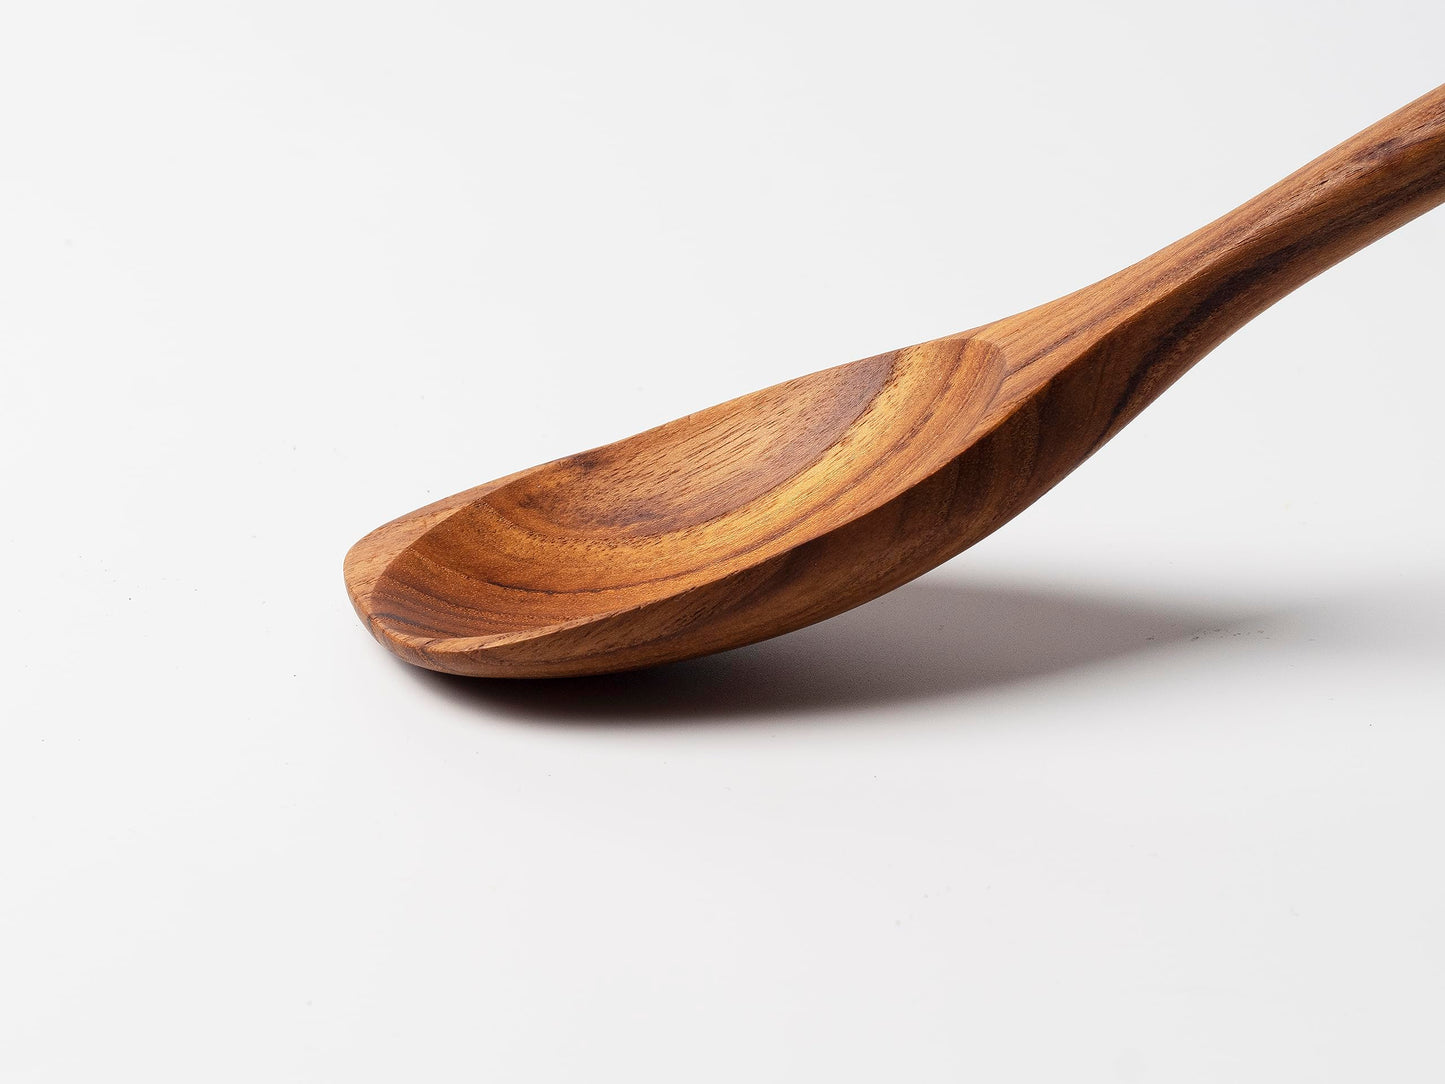 KHRUT, Teak Corner Spoon, 13.2 inch long, Teak wooden utensils, Wooden Corner Spoon, Long handle Corner Spoon for cooking, Teflon friendly, Natural